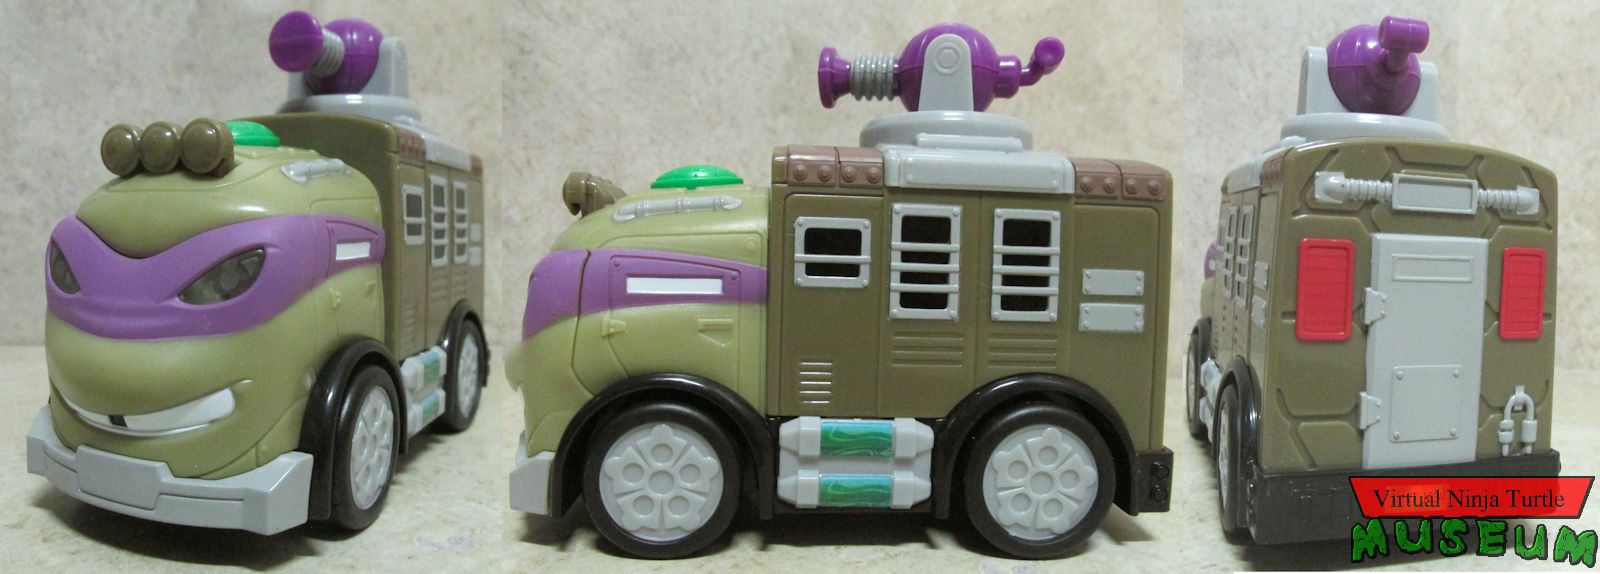 Donatello's Combat Truck